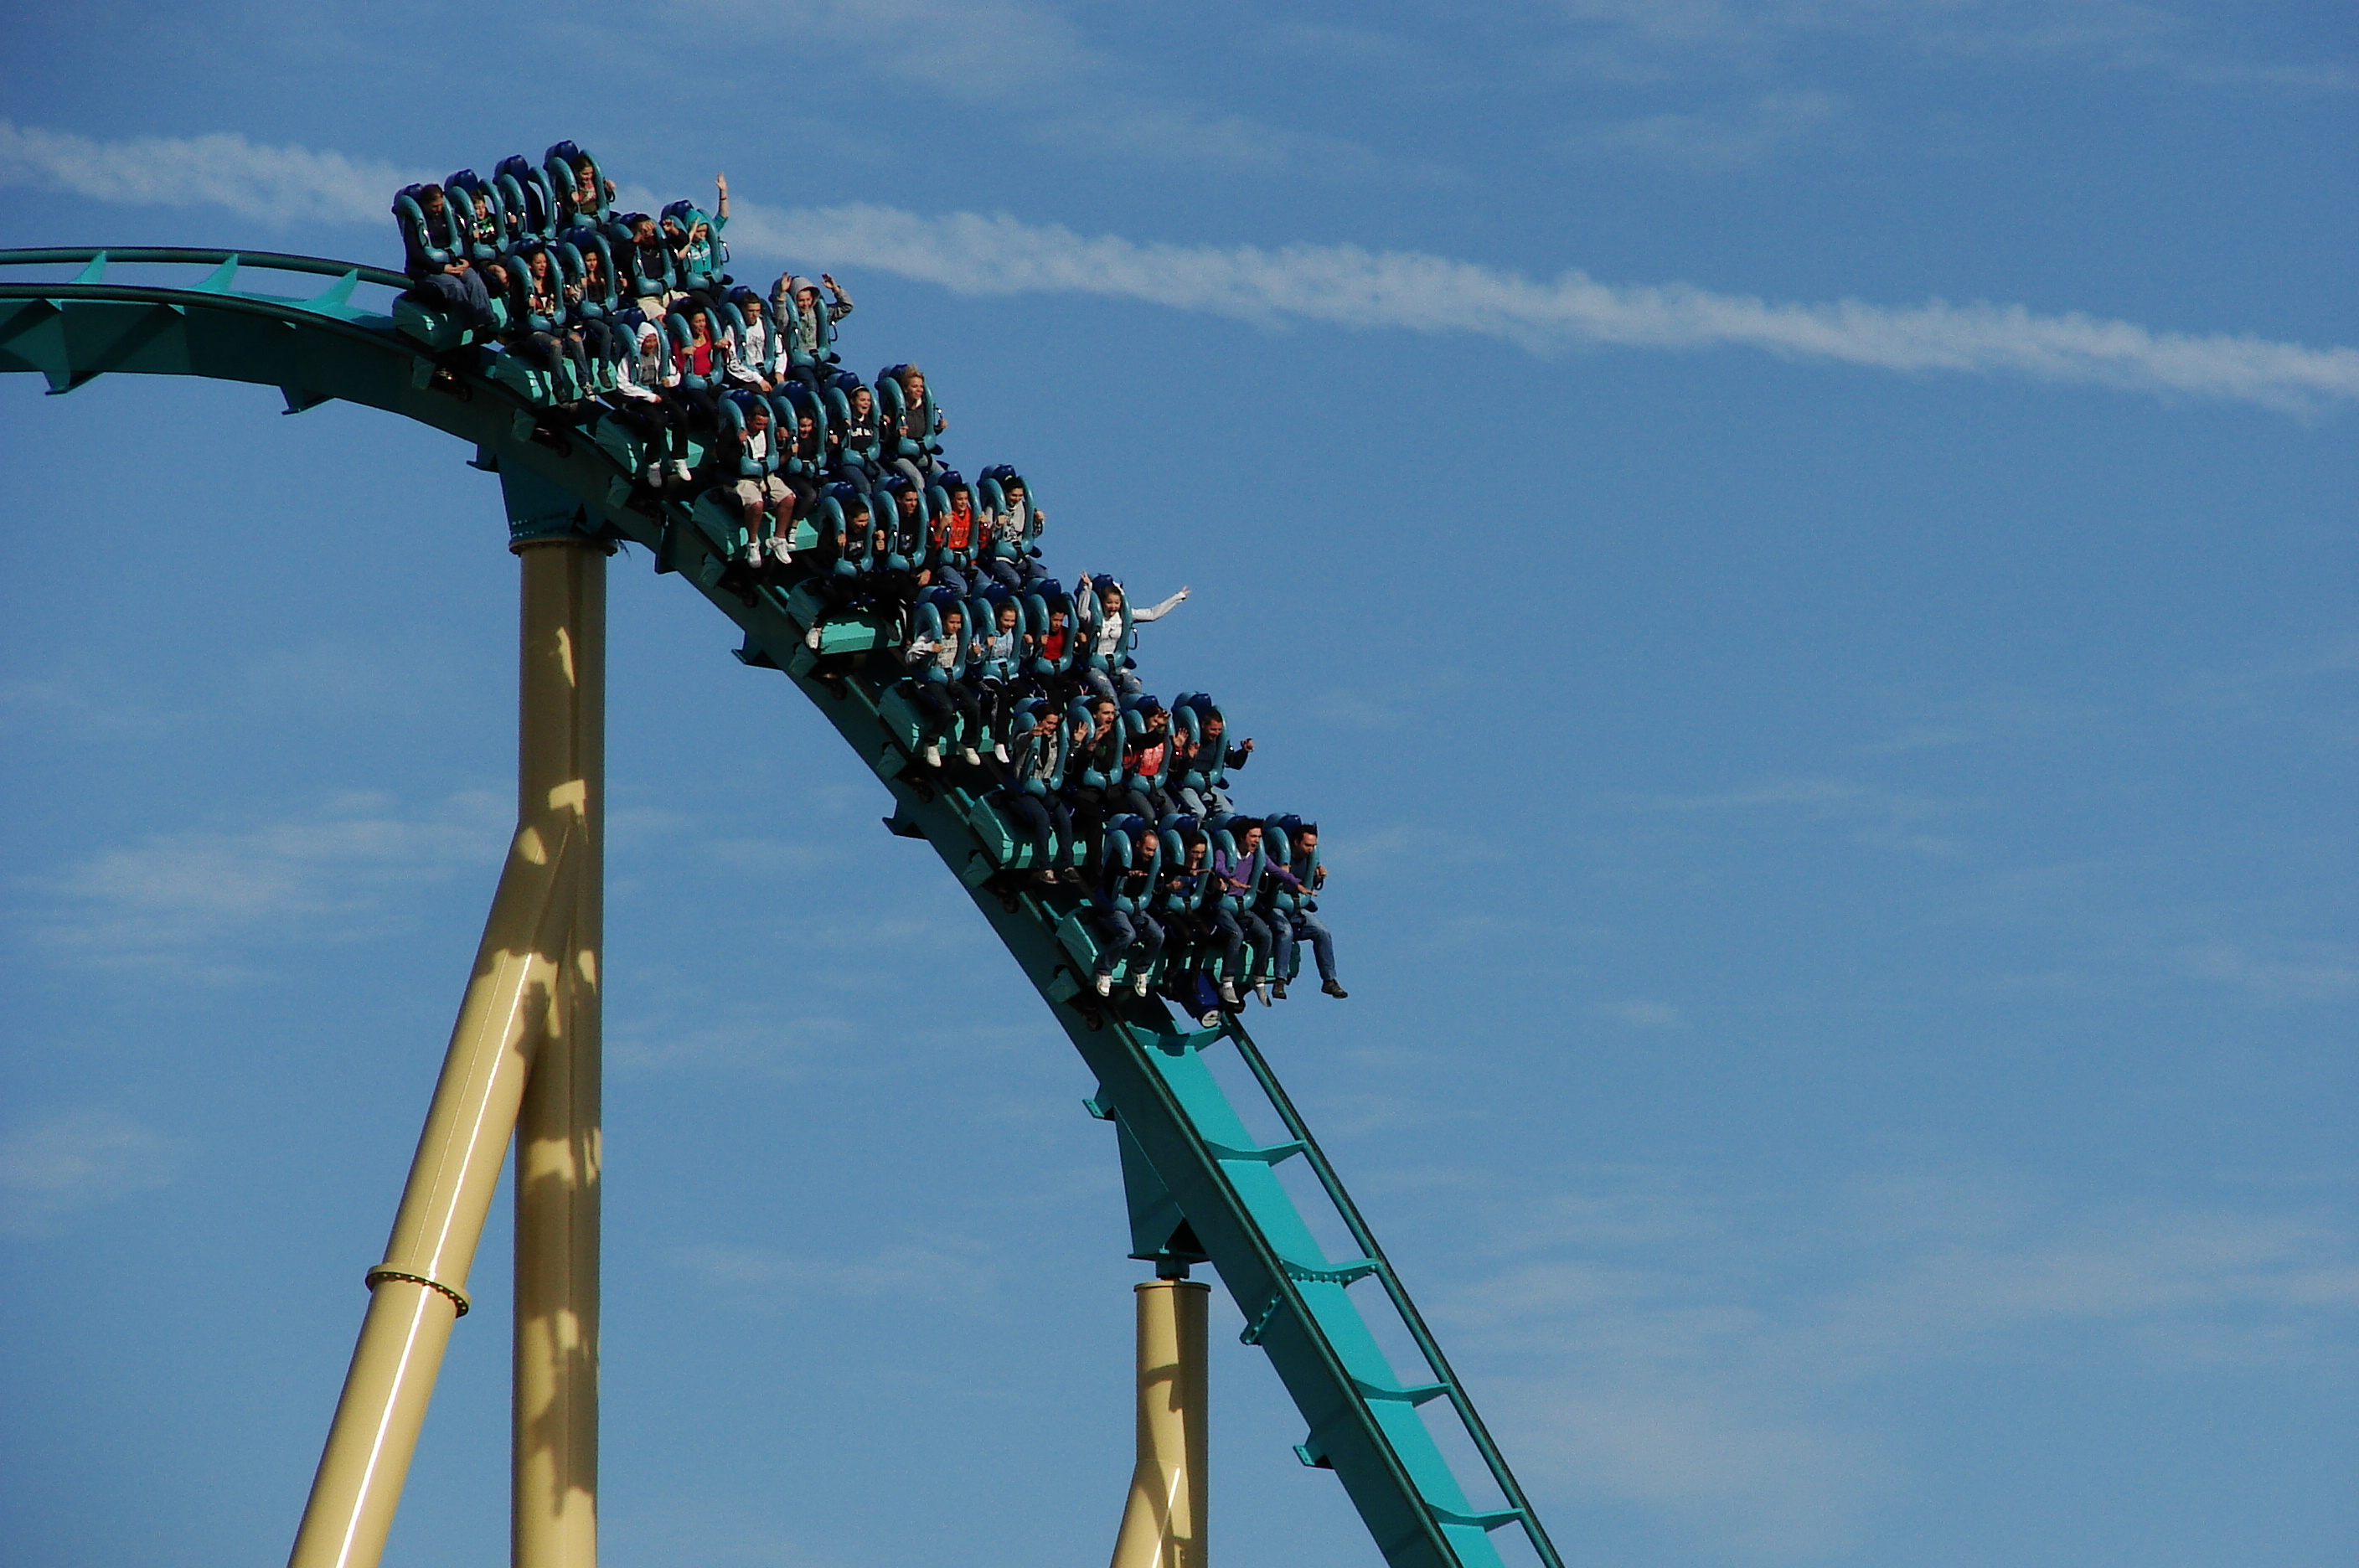 The Kraken roller coaster ride at Sea...